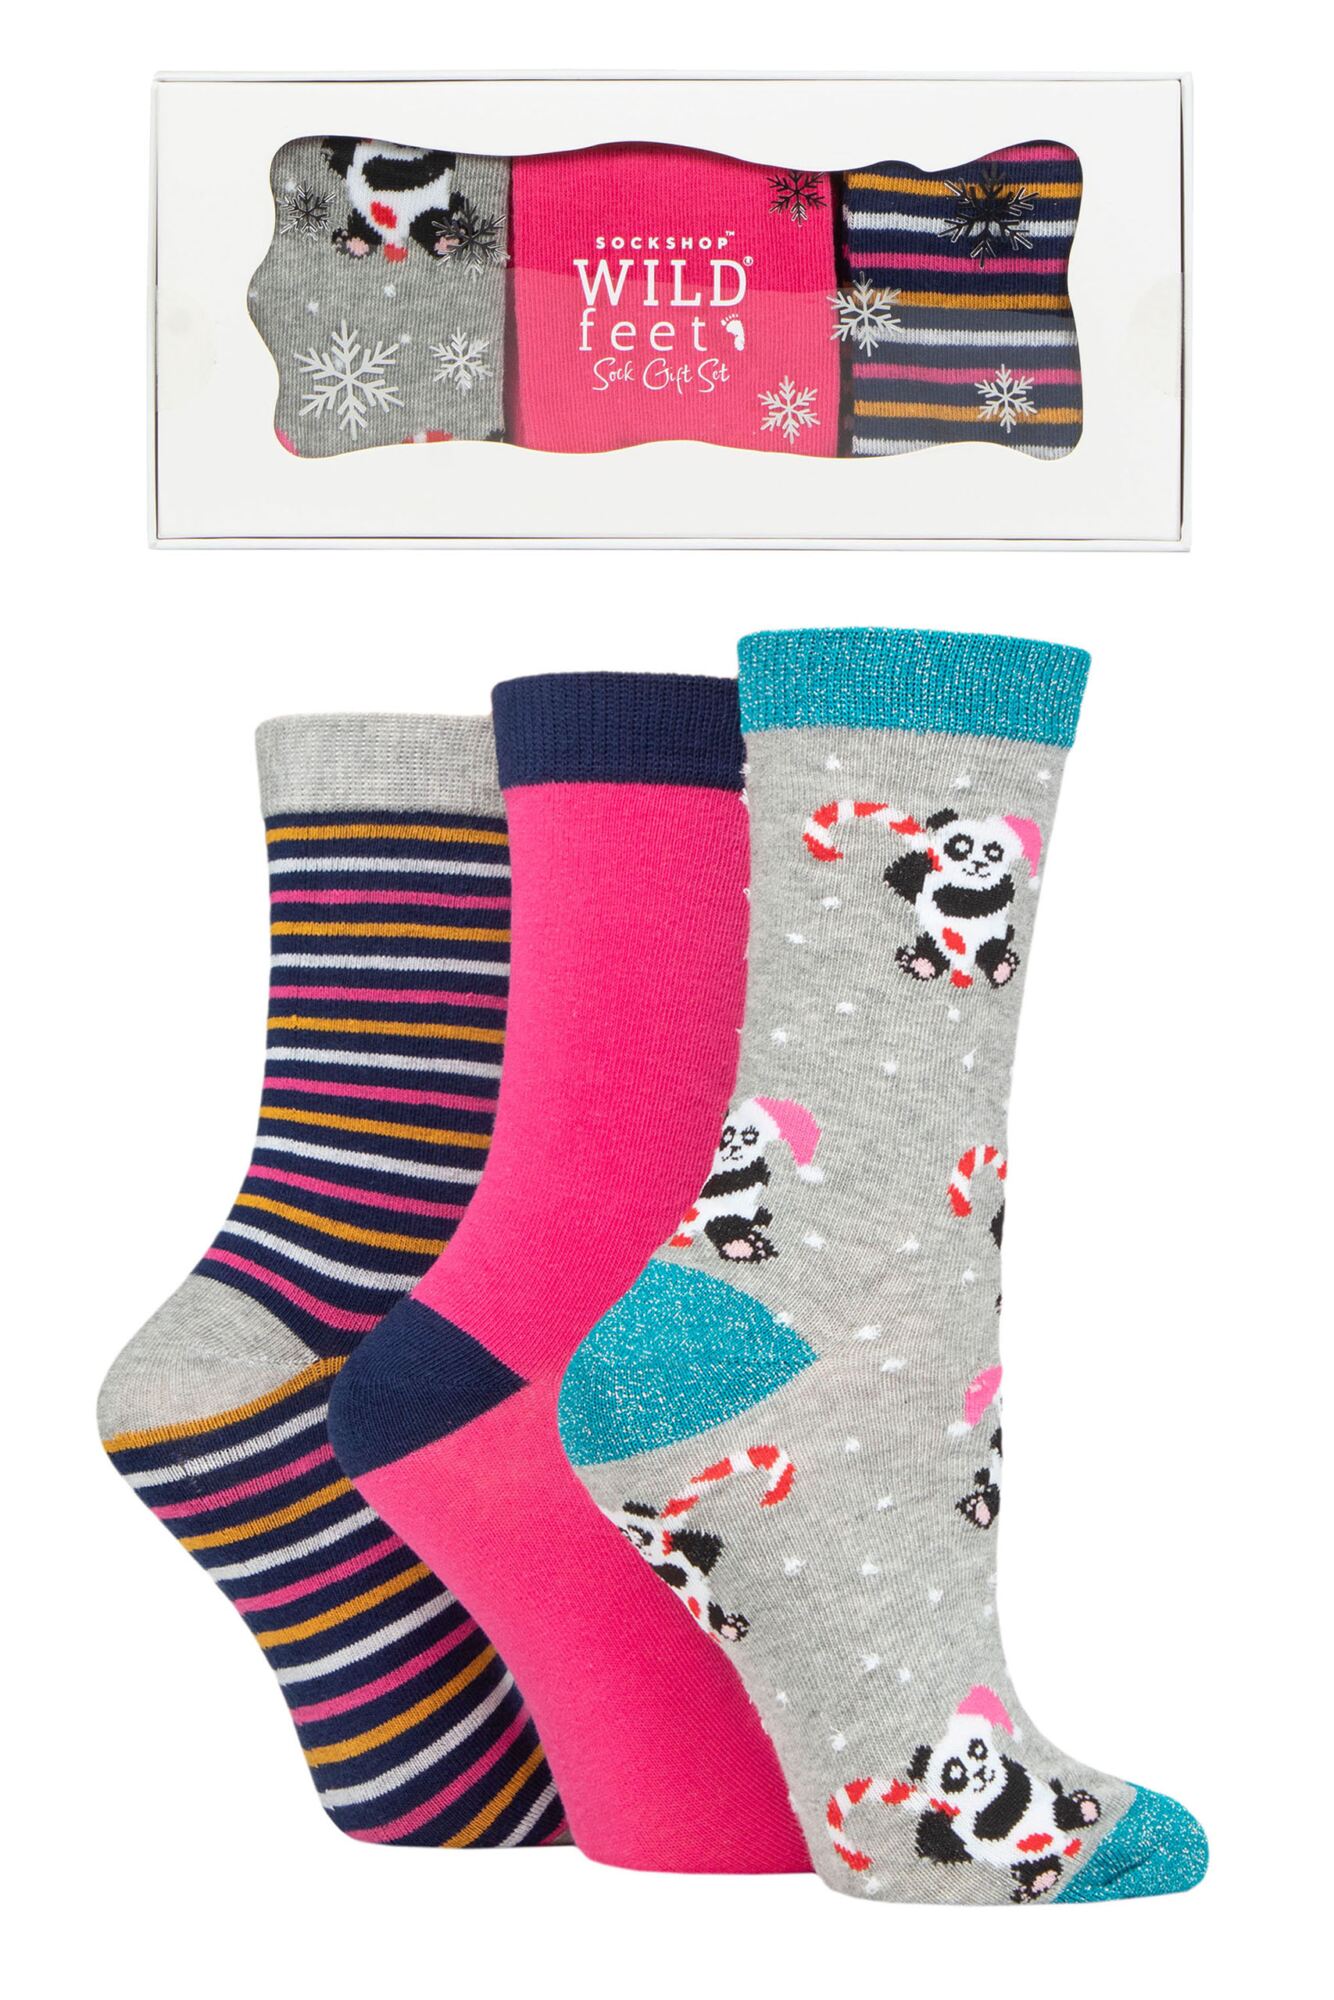 WILDFEET 3Pk Christmas Gift Boxed Novelty Cotton Socks- Womens 4-8